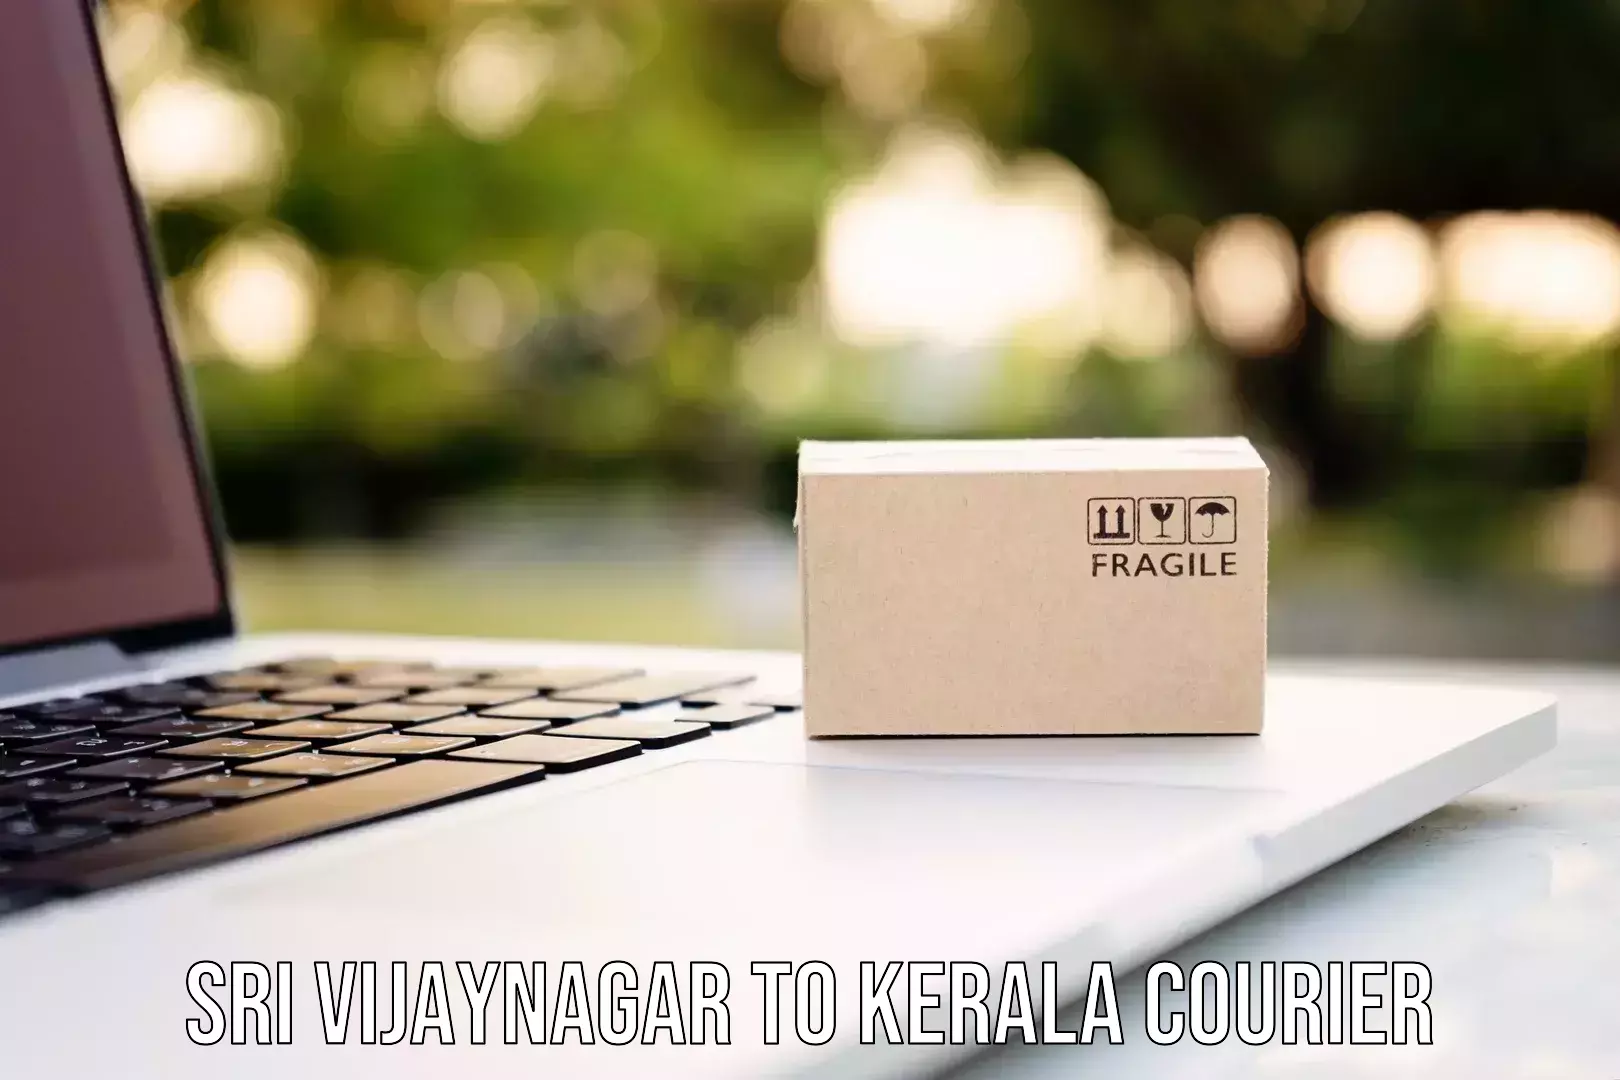 Urgent courier needs Sri Vijaynagar to Nedumkandam